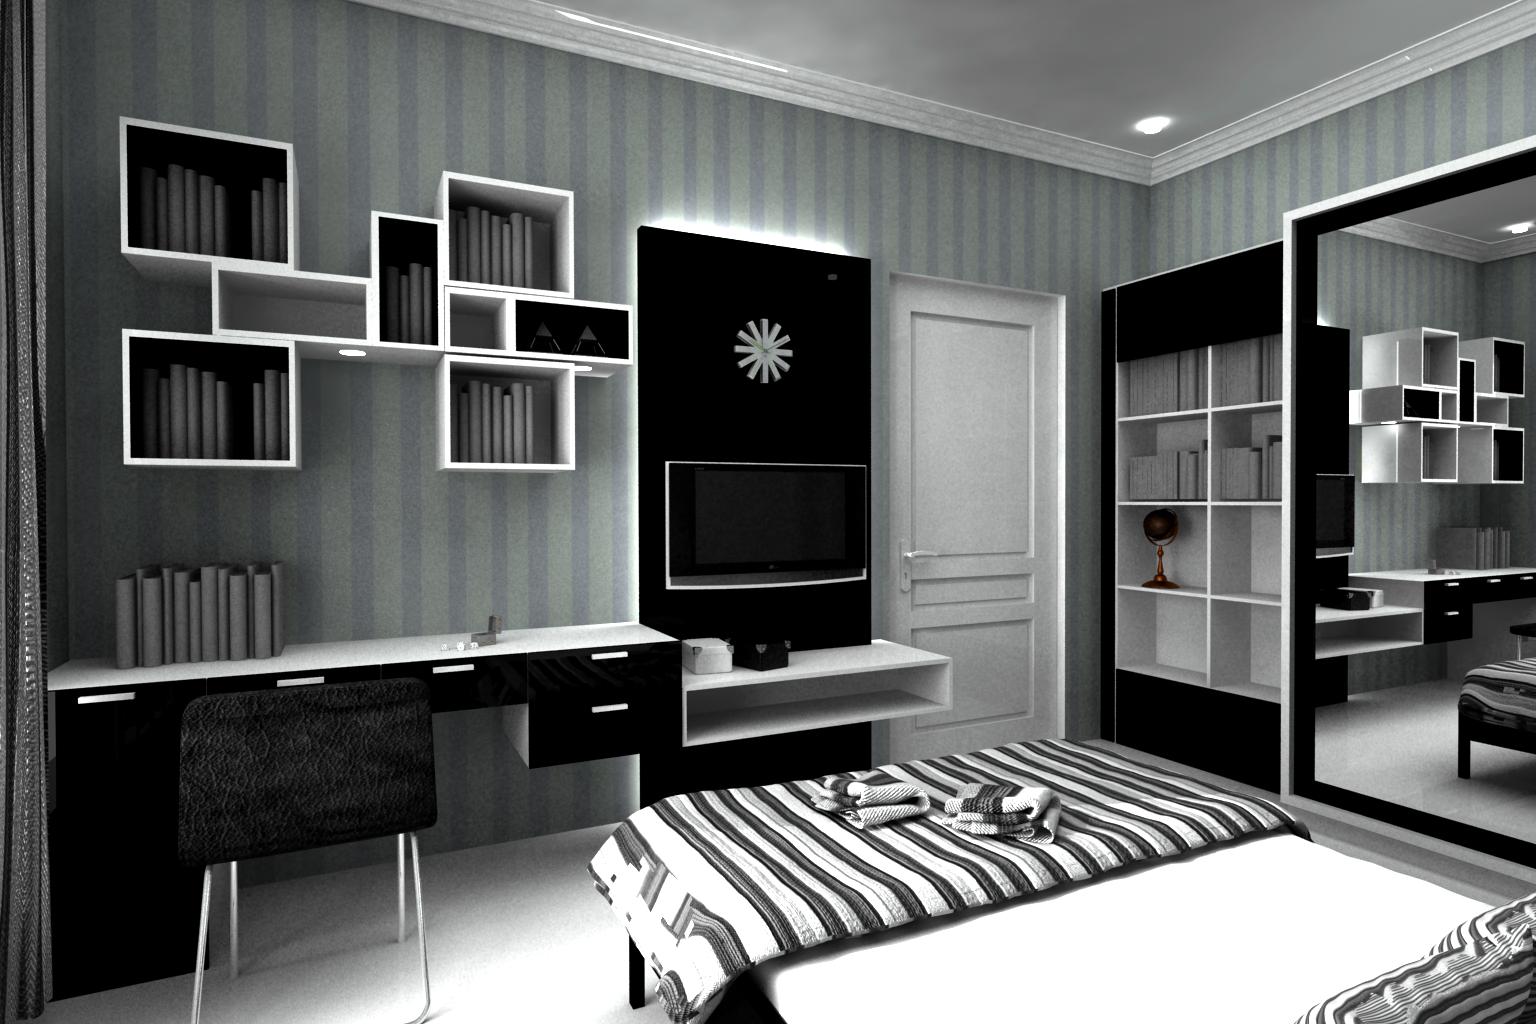 carta da parati dinding kamar hitam putih,mobilia,camera,bianco e nero,nero,camera da letto